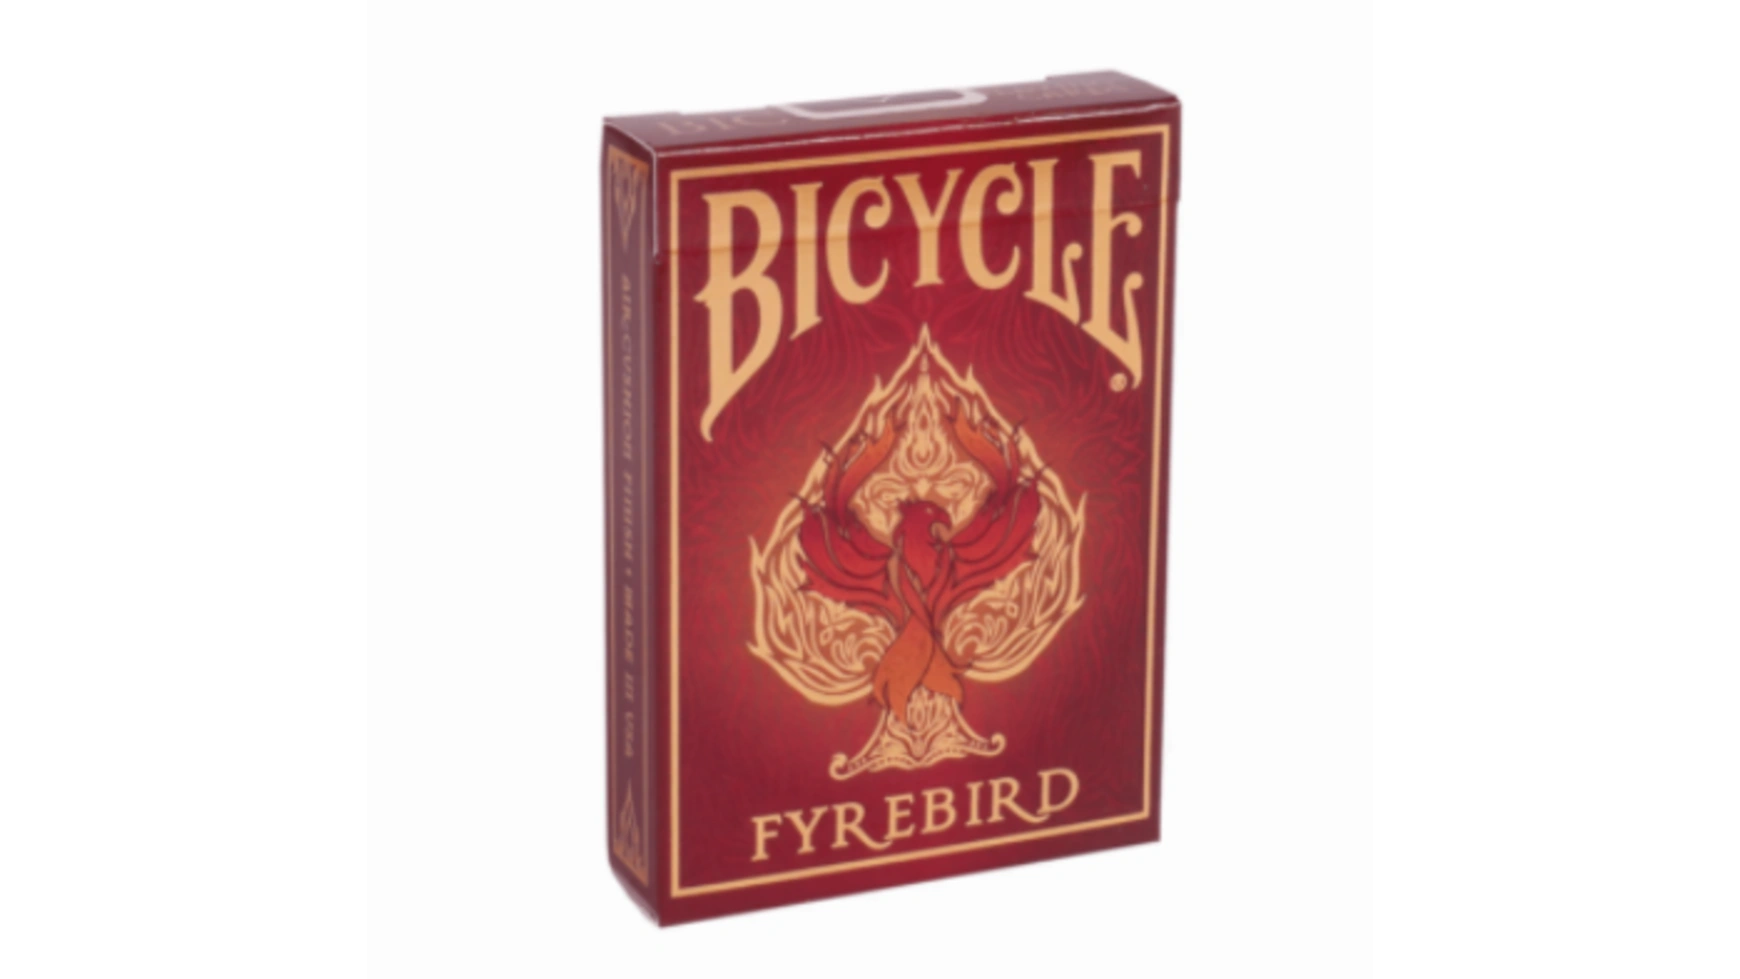 Bicycle игральные карты Fyrebird карты bicycle double face red blue